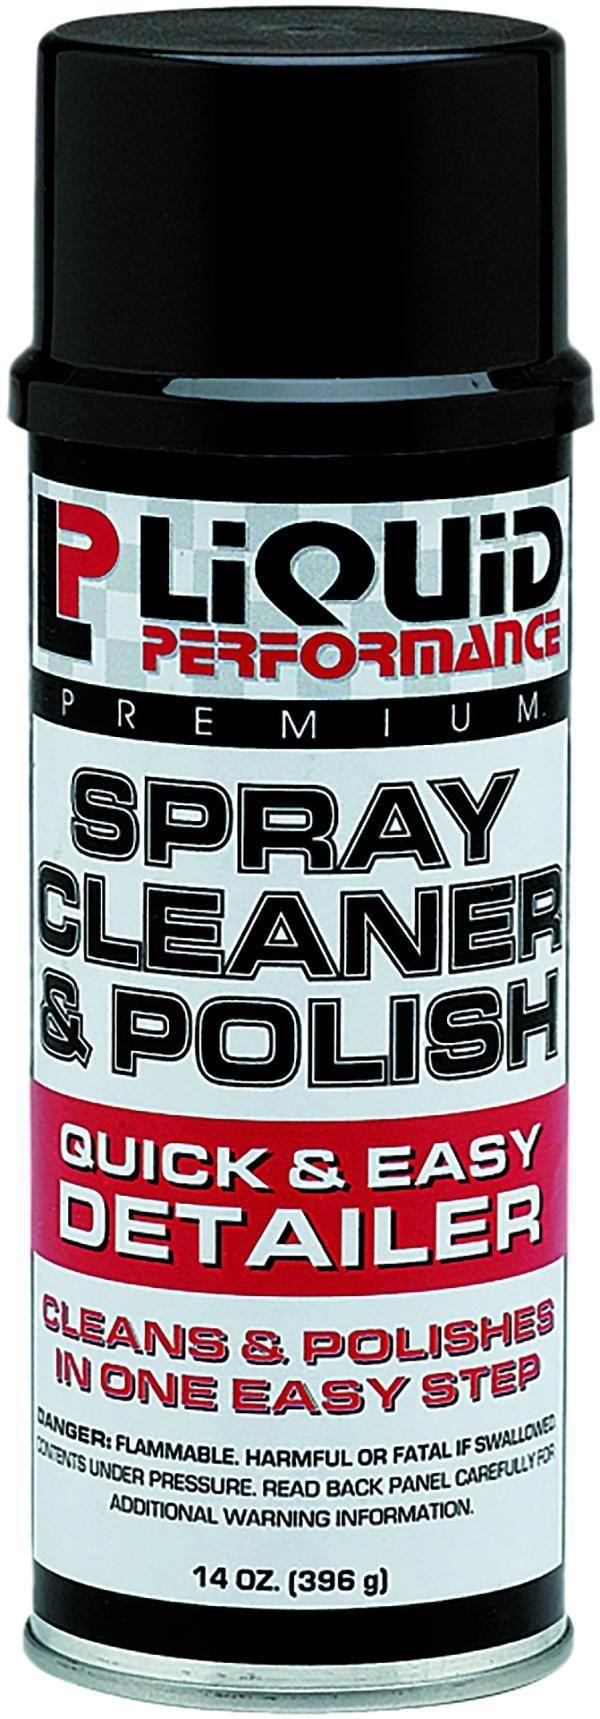 4MQ3-LIQUID-PERF-0140 Premium Spray Cleaner and Polish - 14 Oz